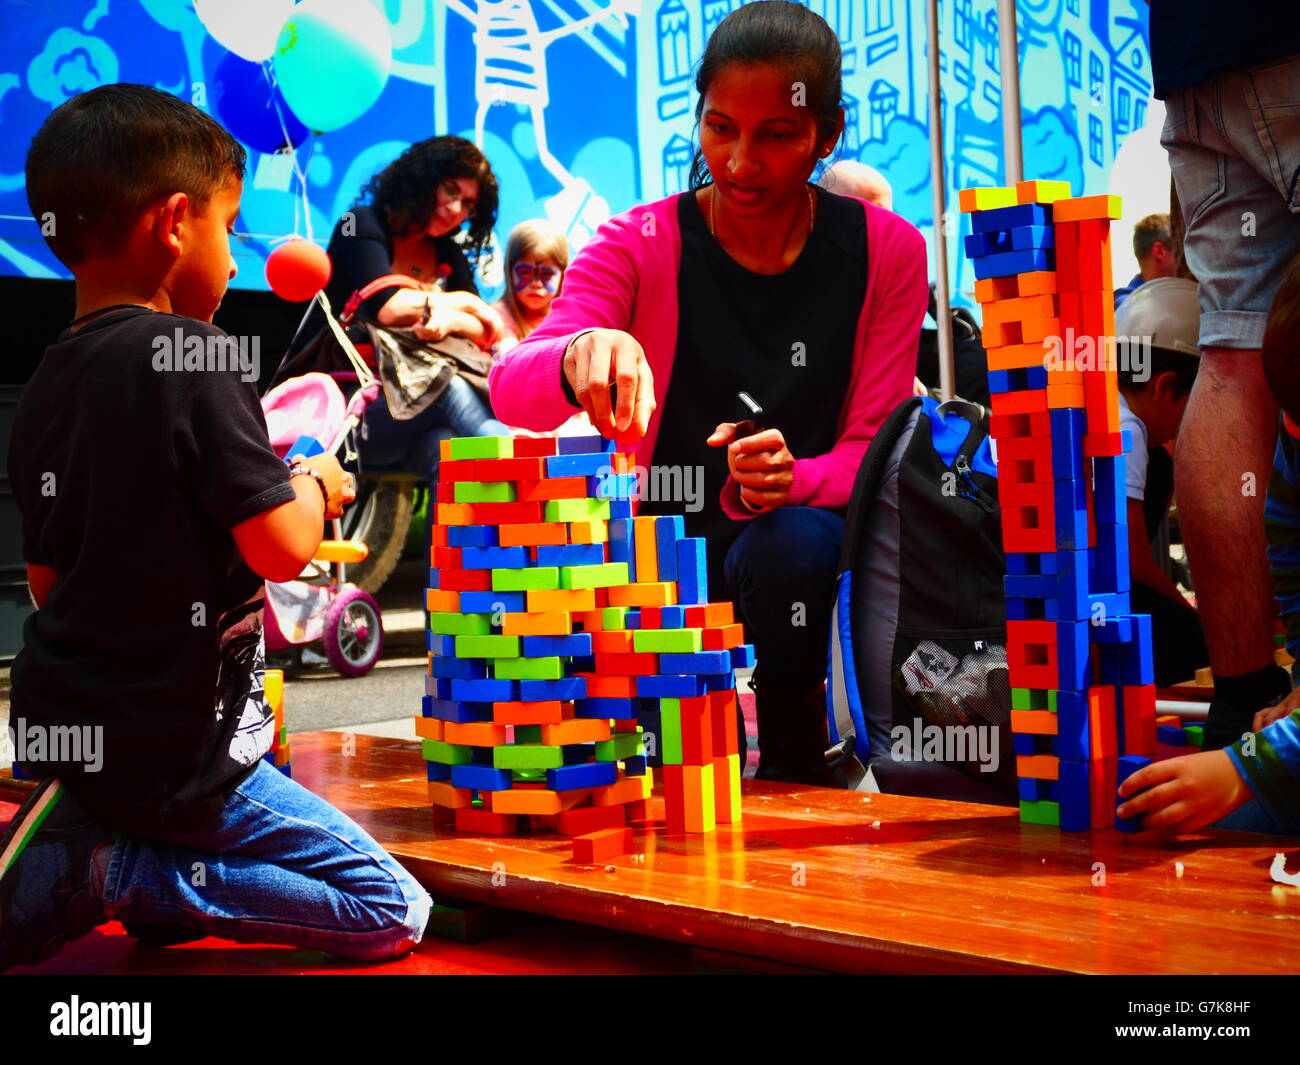 Europe Germany Munich Streetlife festival children stacking wooden blocks toys Stock Photo